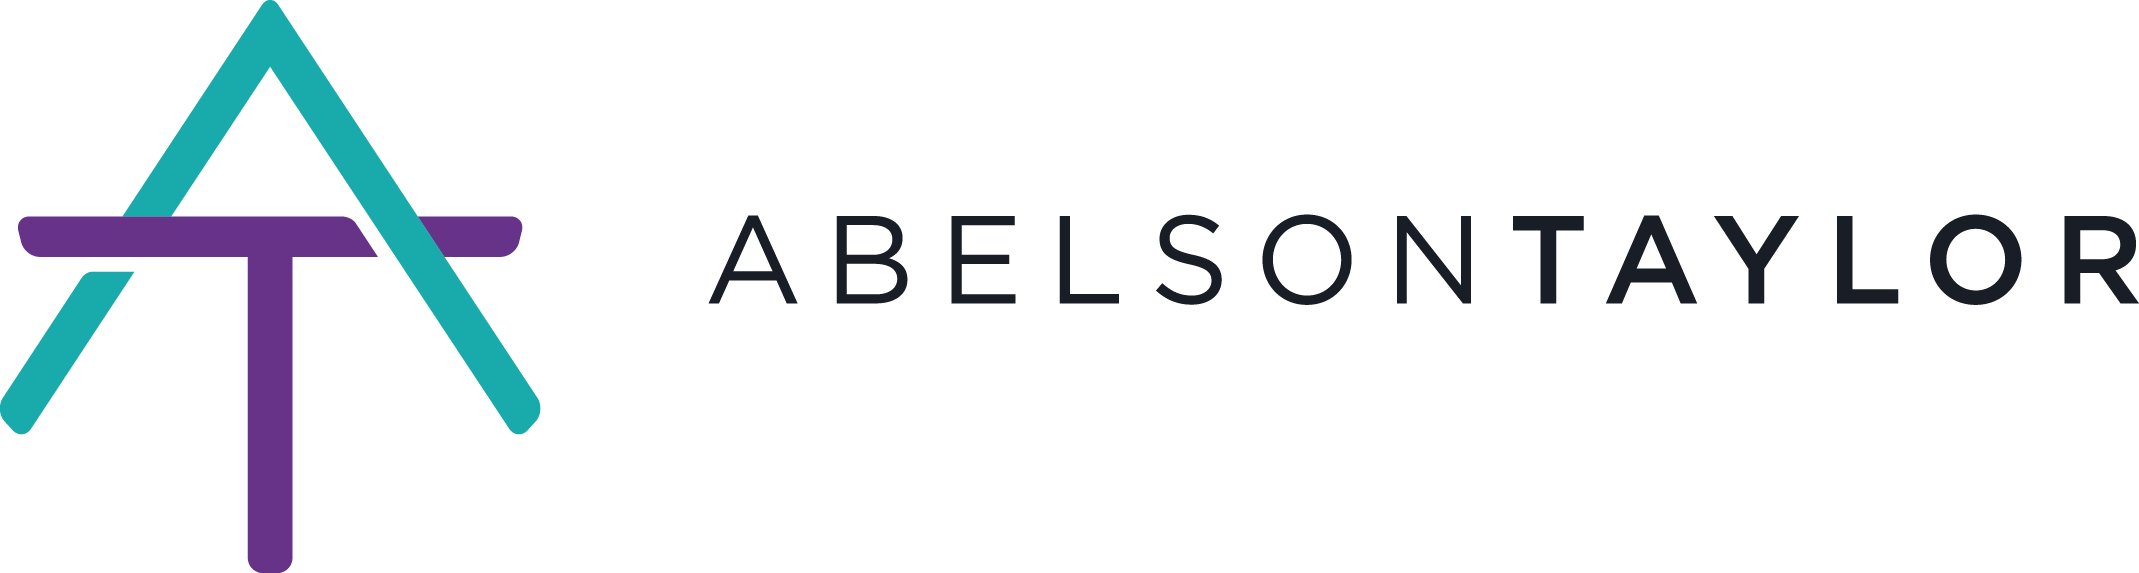 AbelsonTaylor Logo (1)